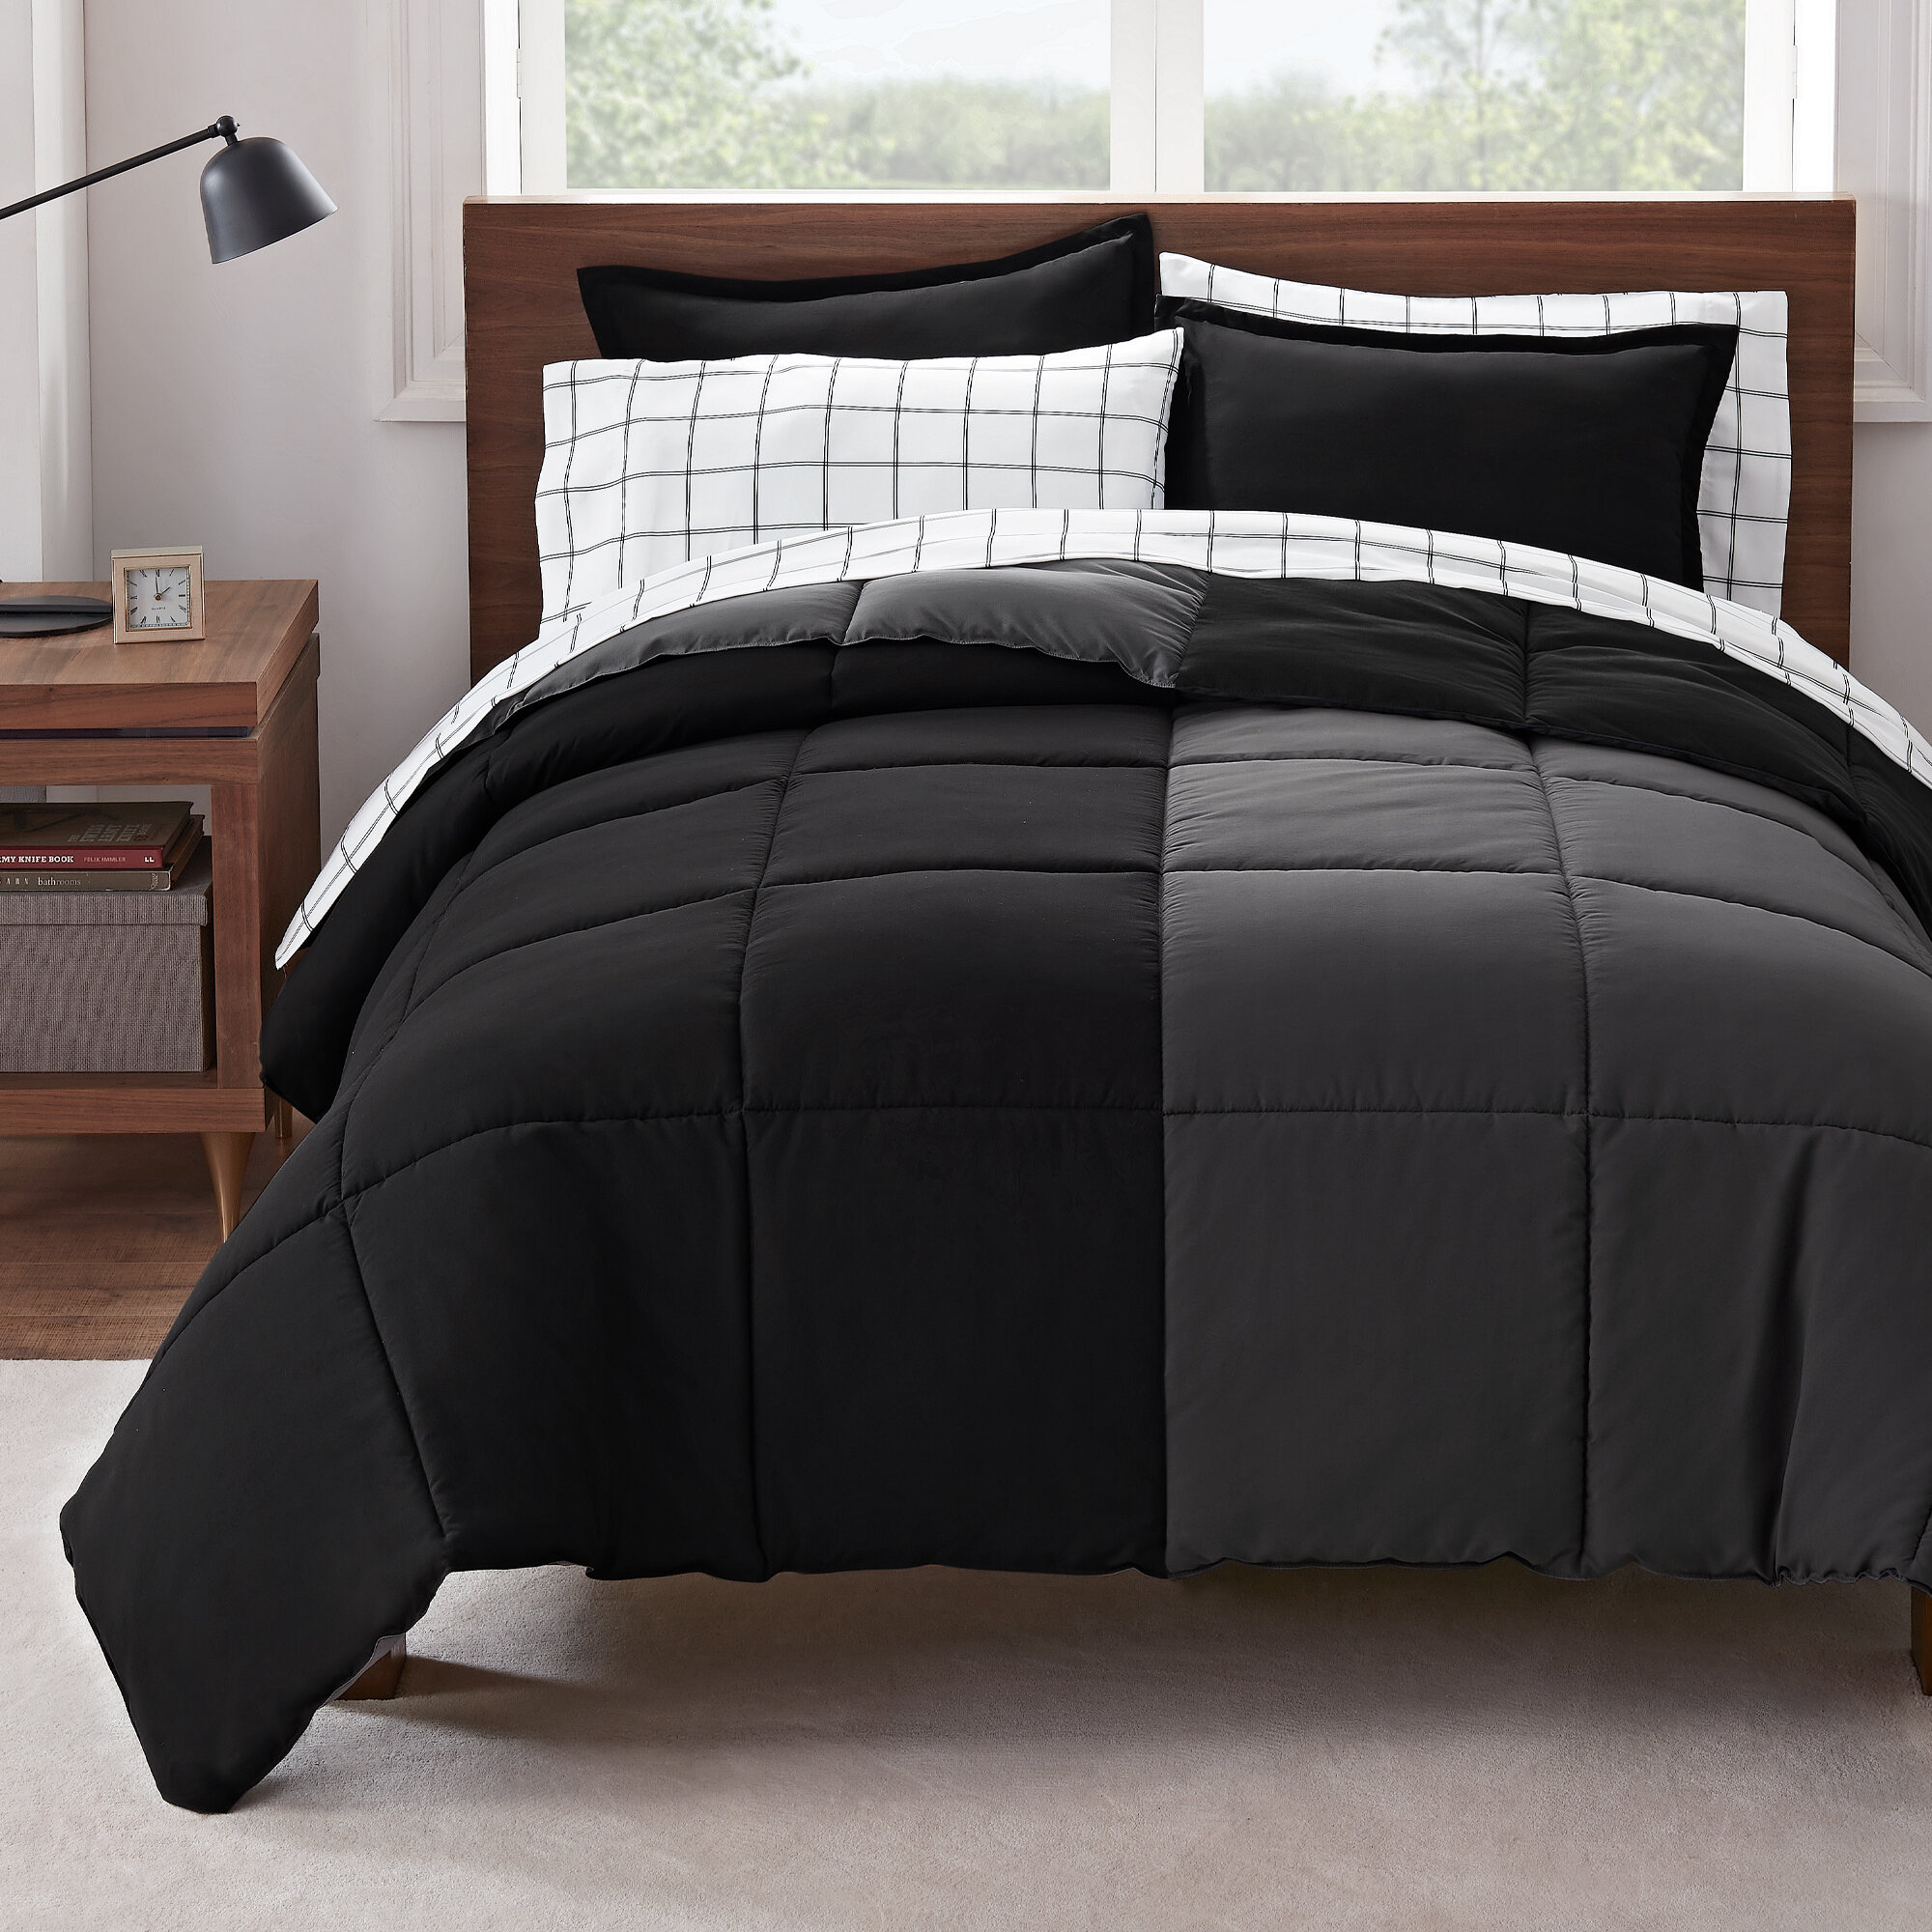 Black Bedding Sets Free Shipping Over 35 Wayfair